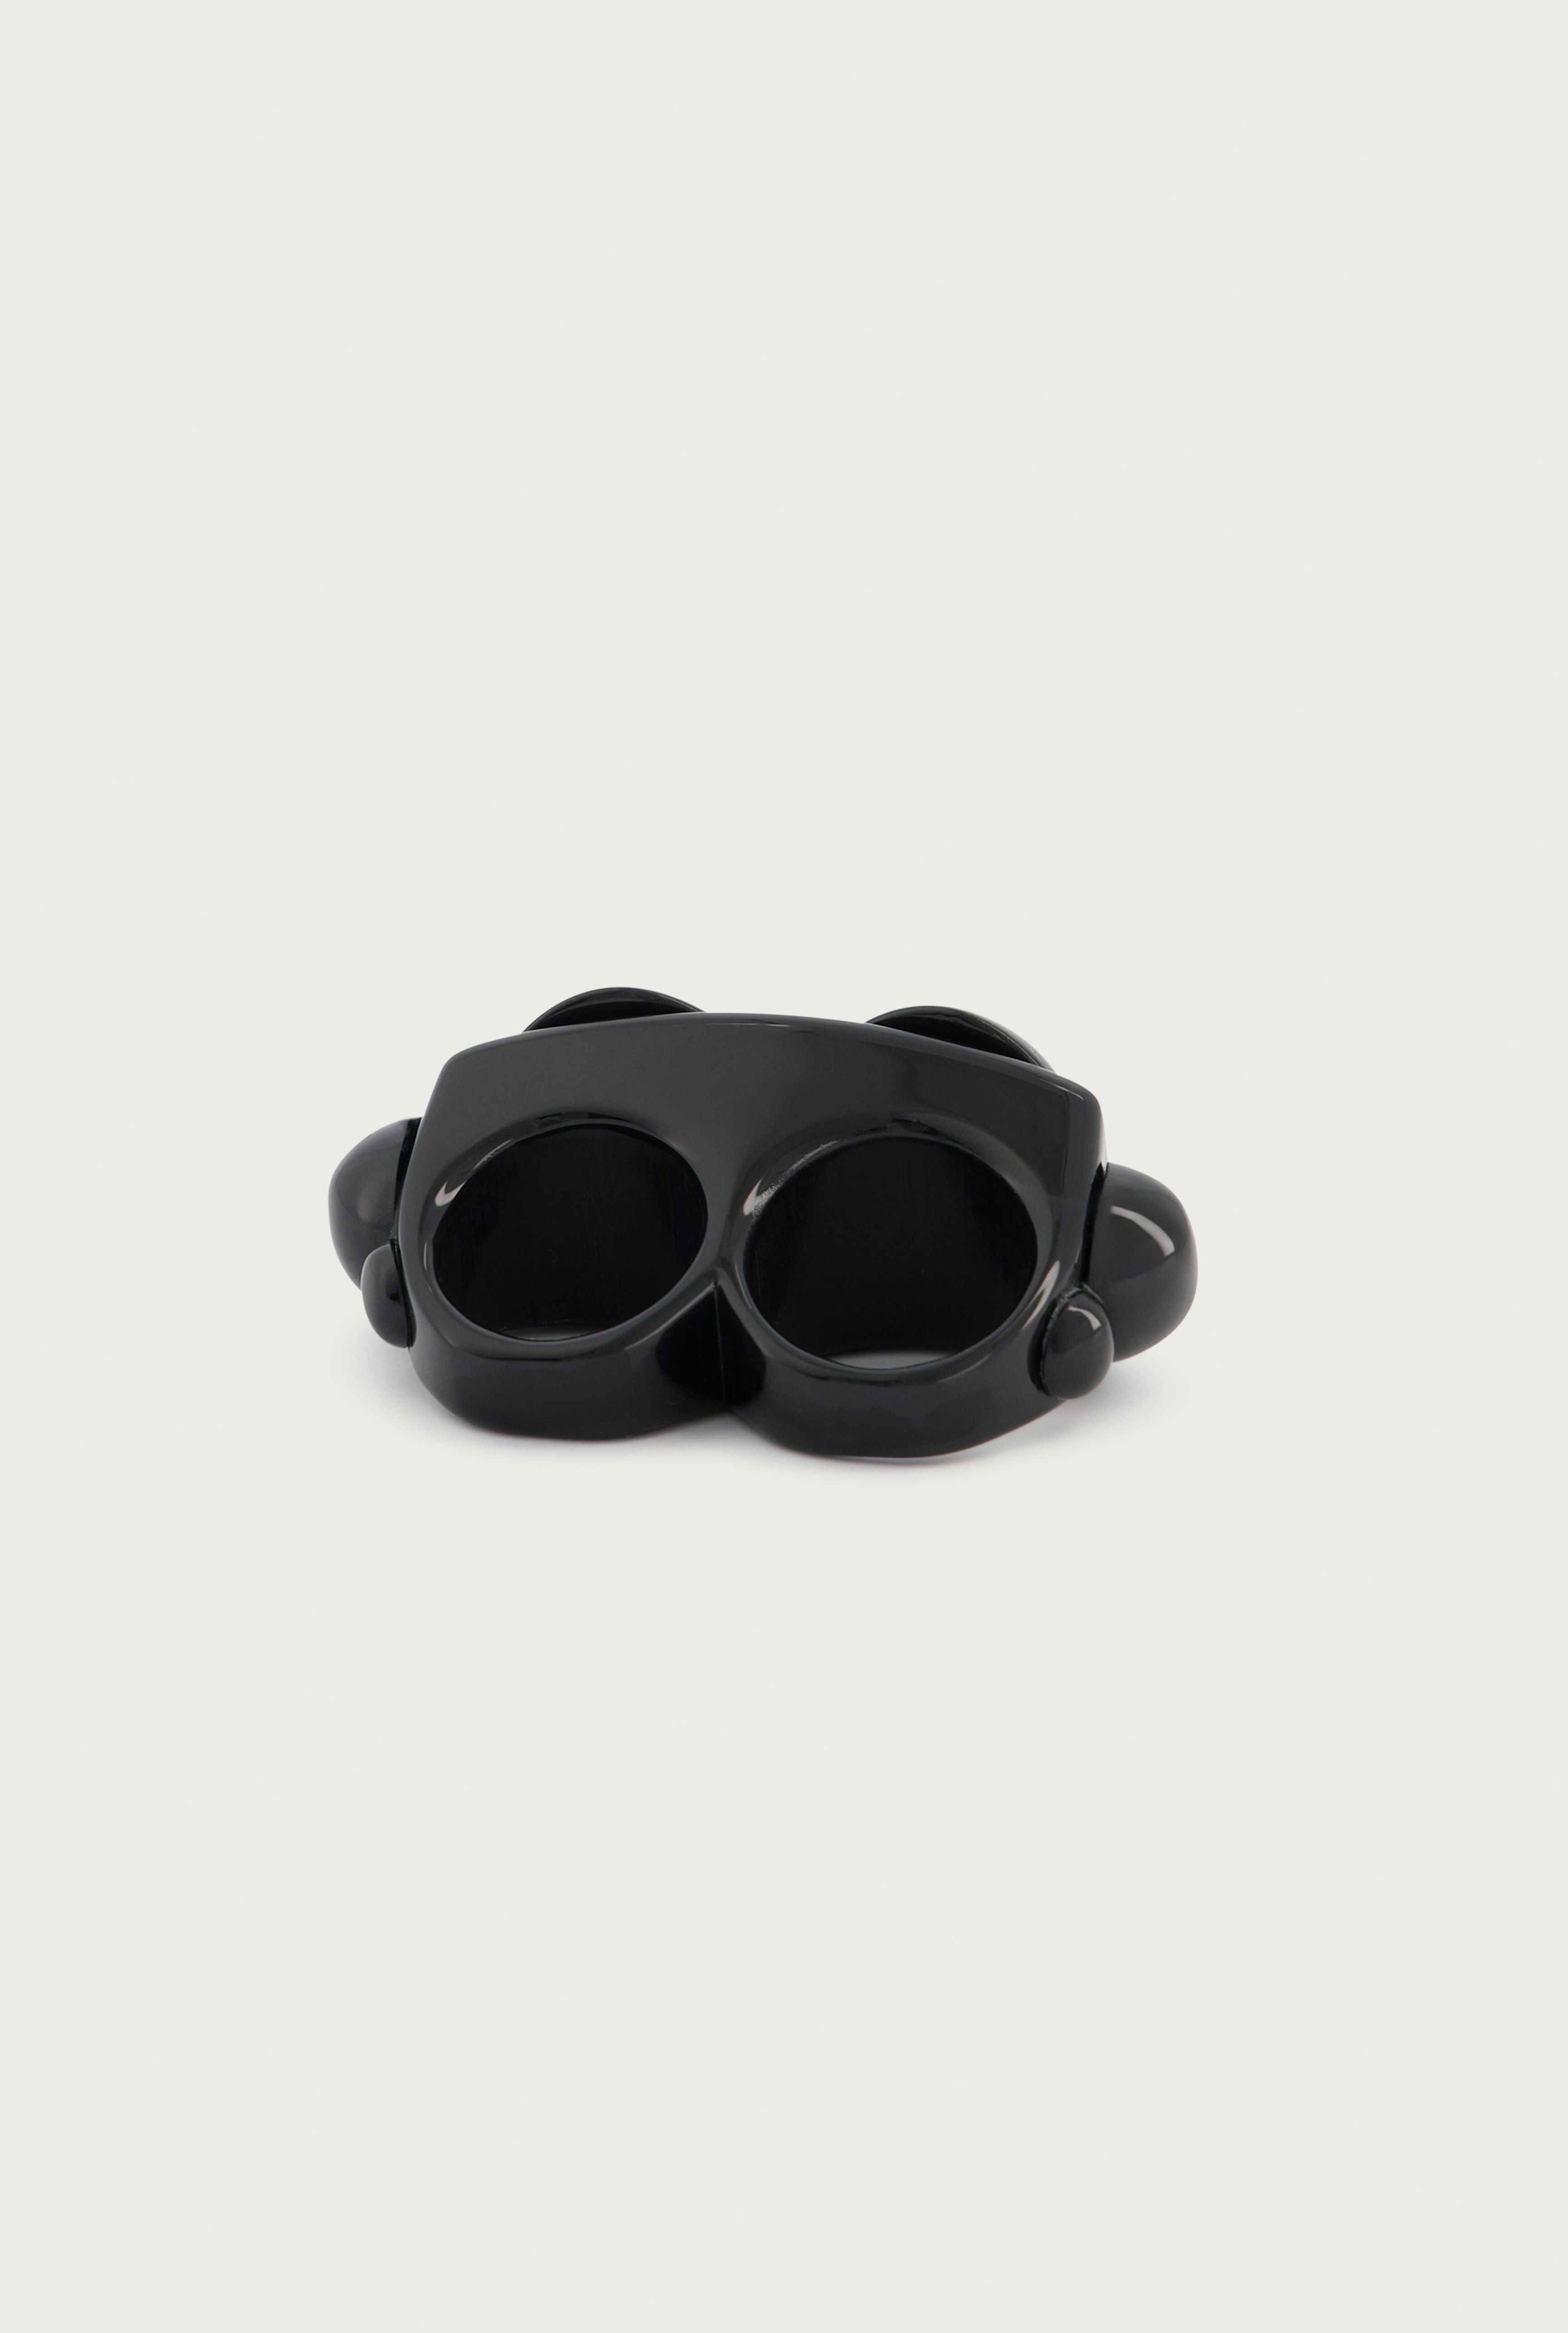 The Black Siamese Ring Jean Paul Gaultier x La Manso